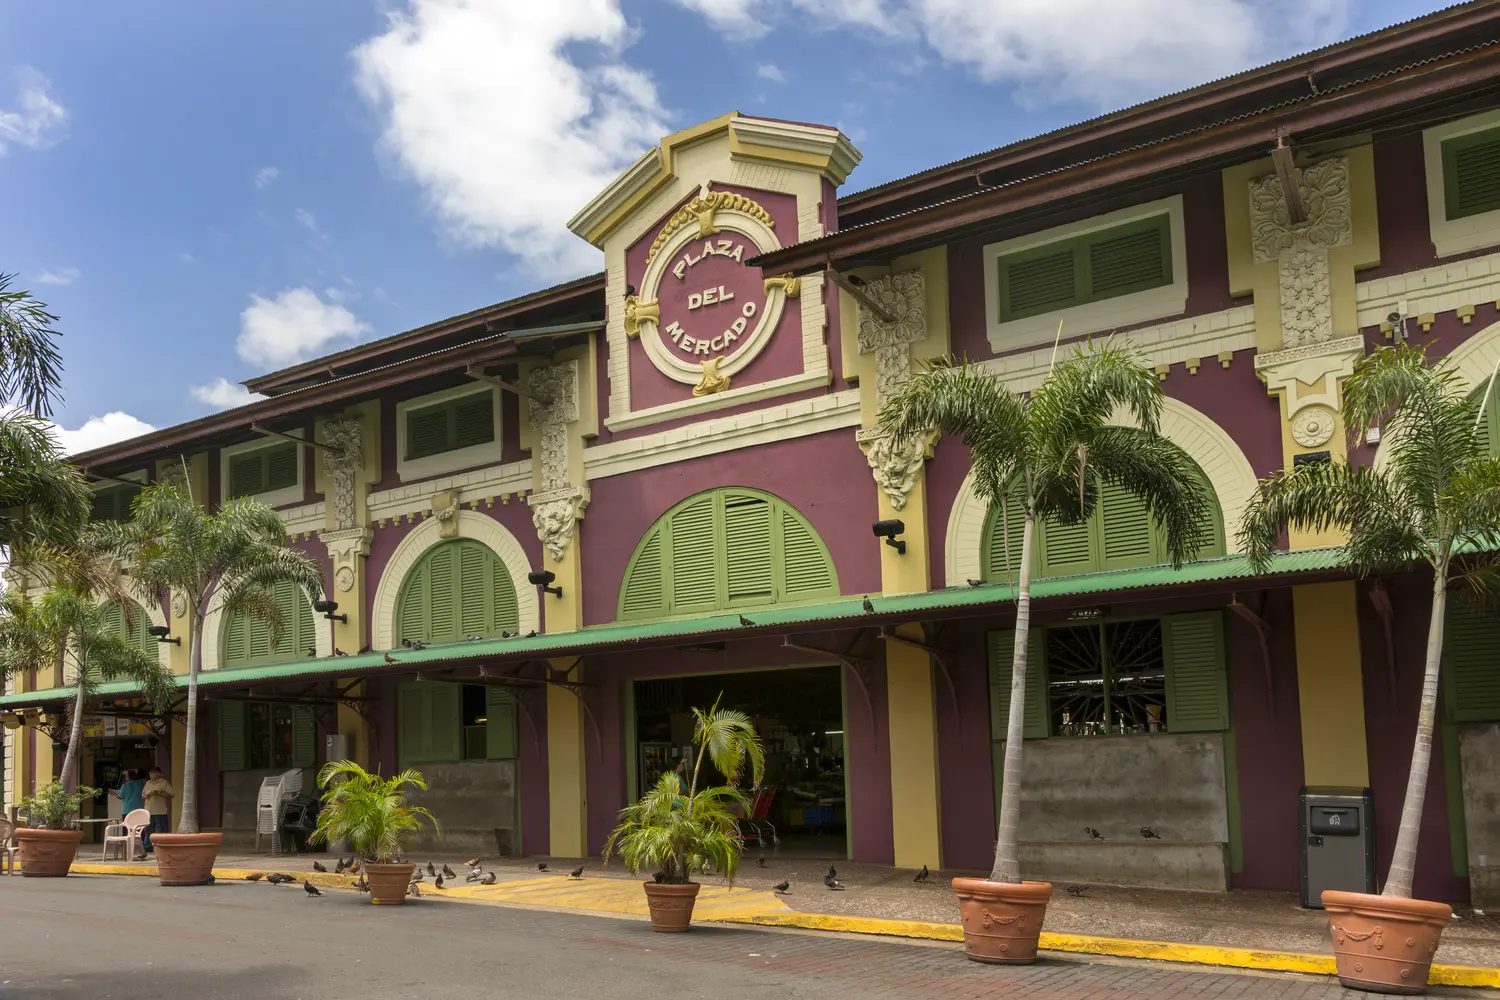 Public market place in Santurce neighborhood in San Juan, Puerto Rico